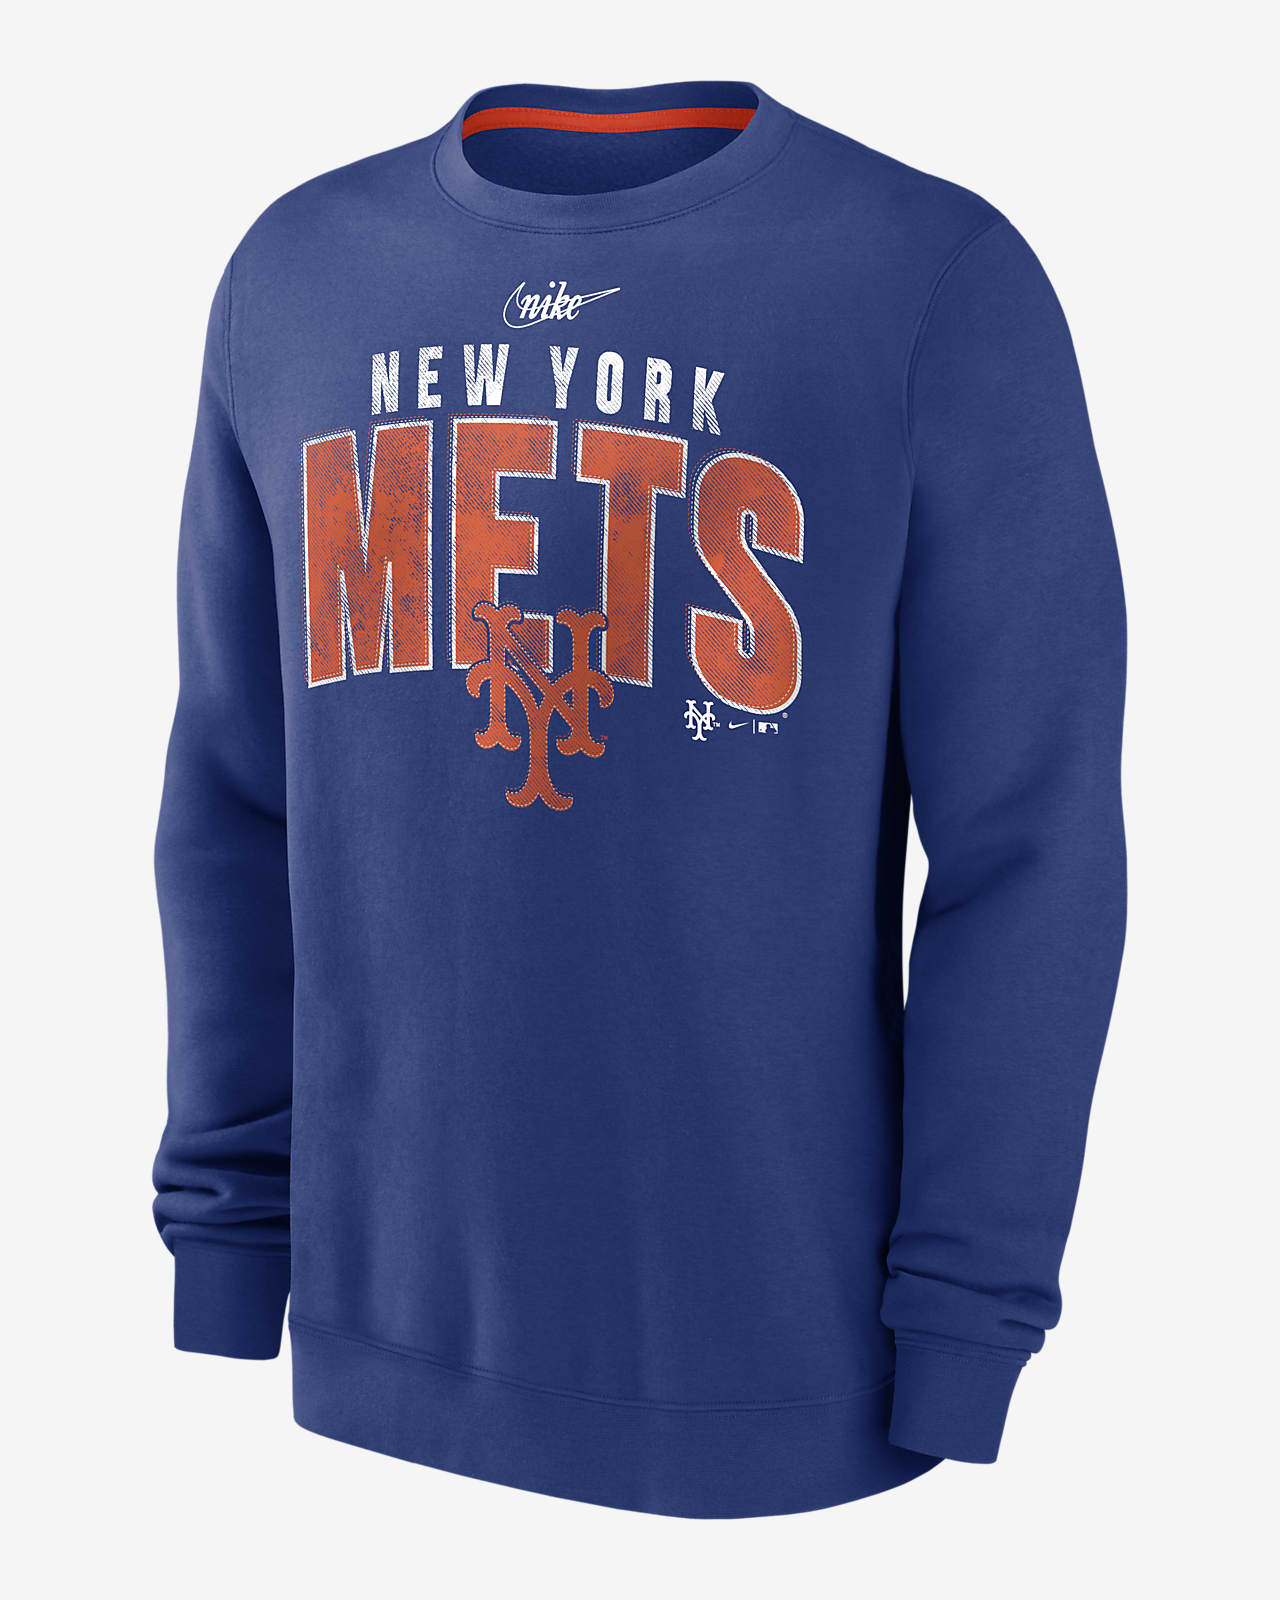 New York Mets Big & Tall Pullover Sweatshirt - Royal/White